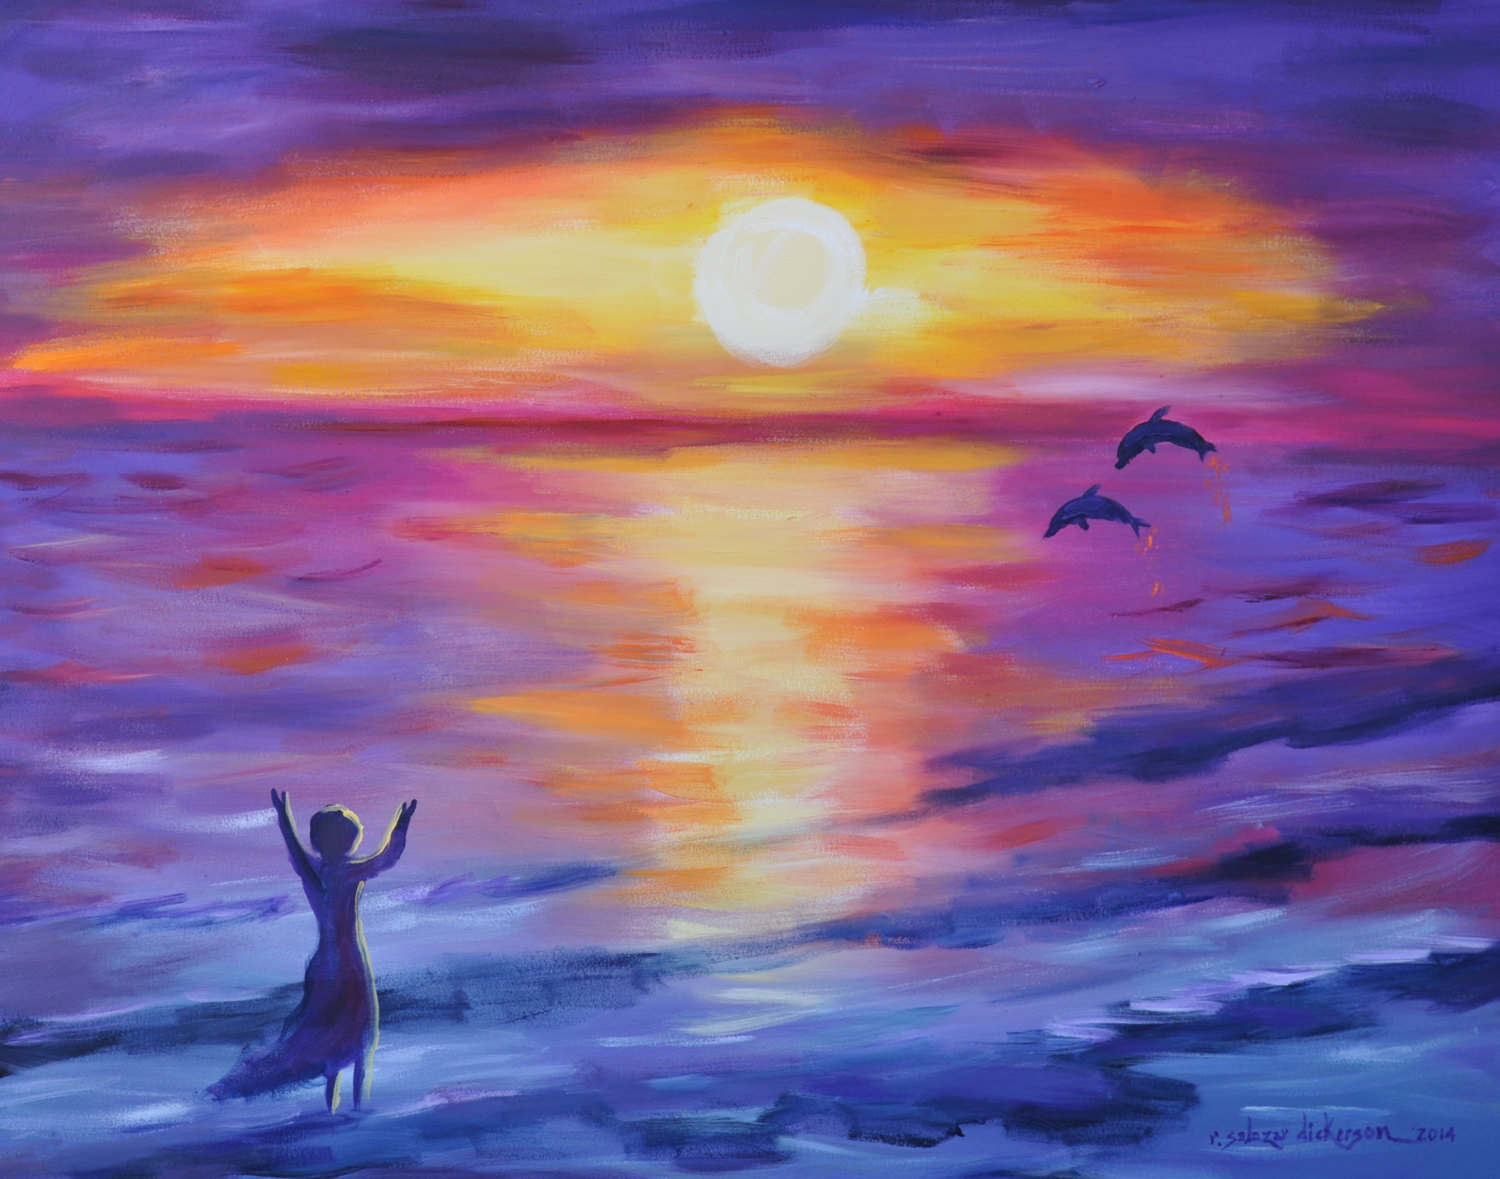 Explore more like simple ocean sunset paintings. 